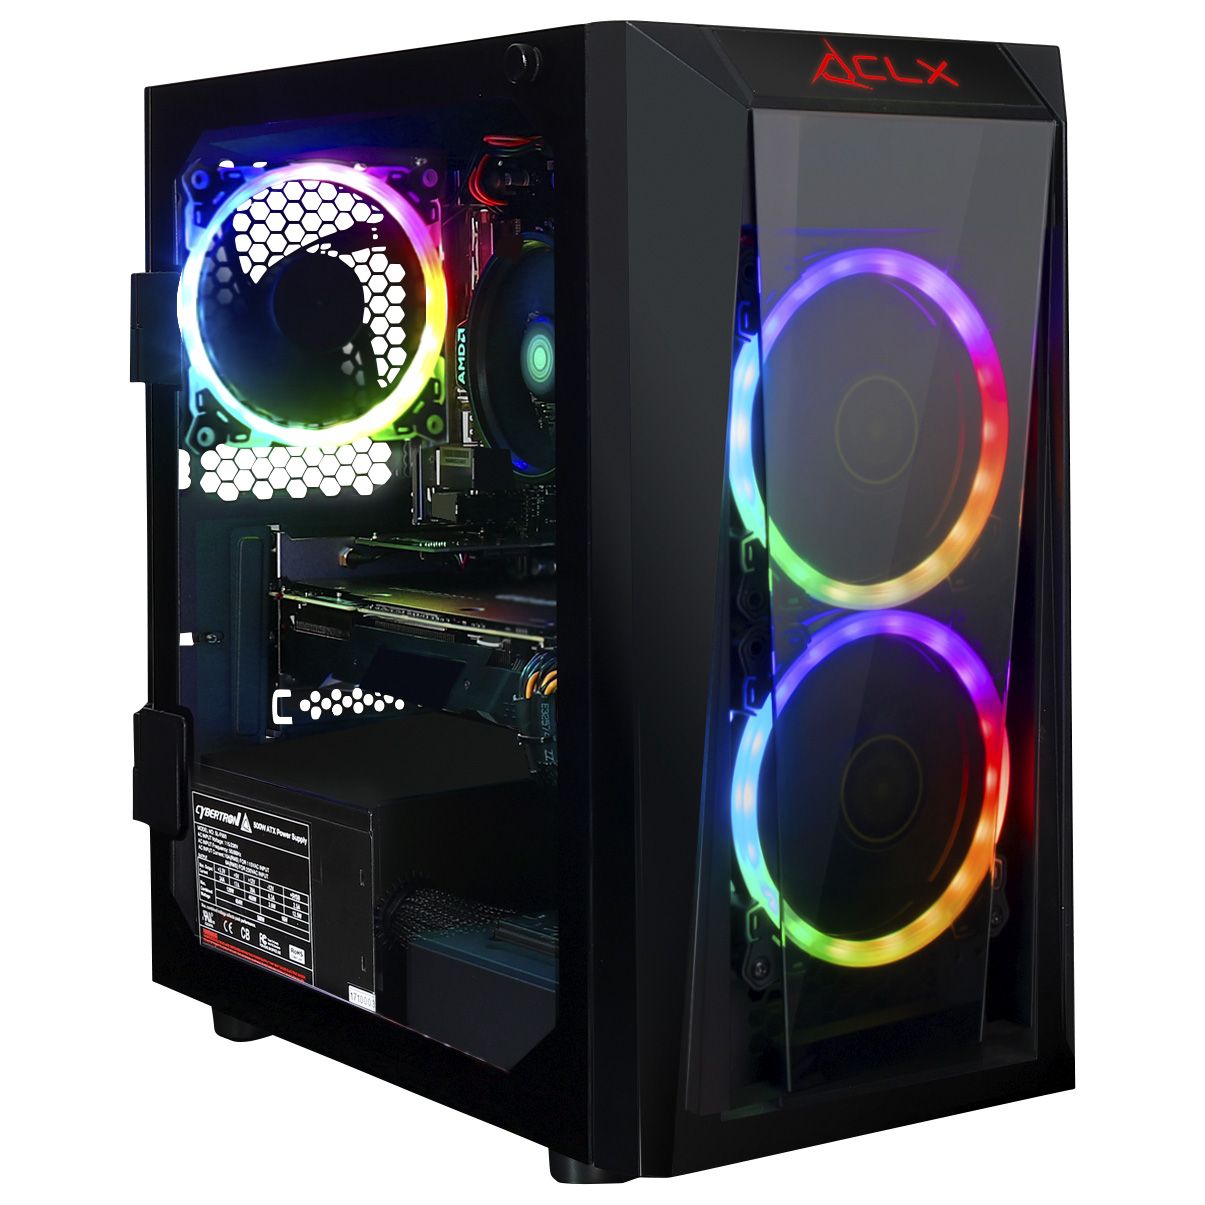 CLX SET VR-Ready AMD Ryzen 5 16GB Memory GeForce GTX 1660 6GB Graphics  960GB SSD Windows 11 Gaming Desktop Computer - Black